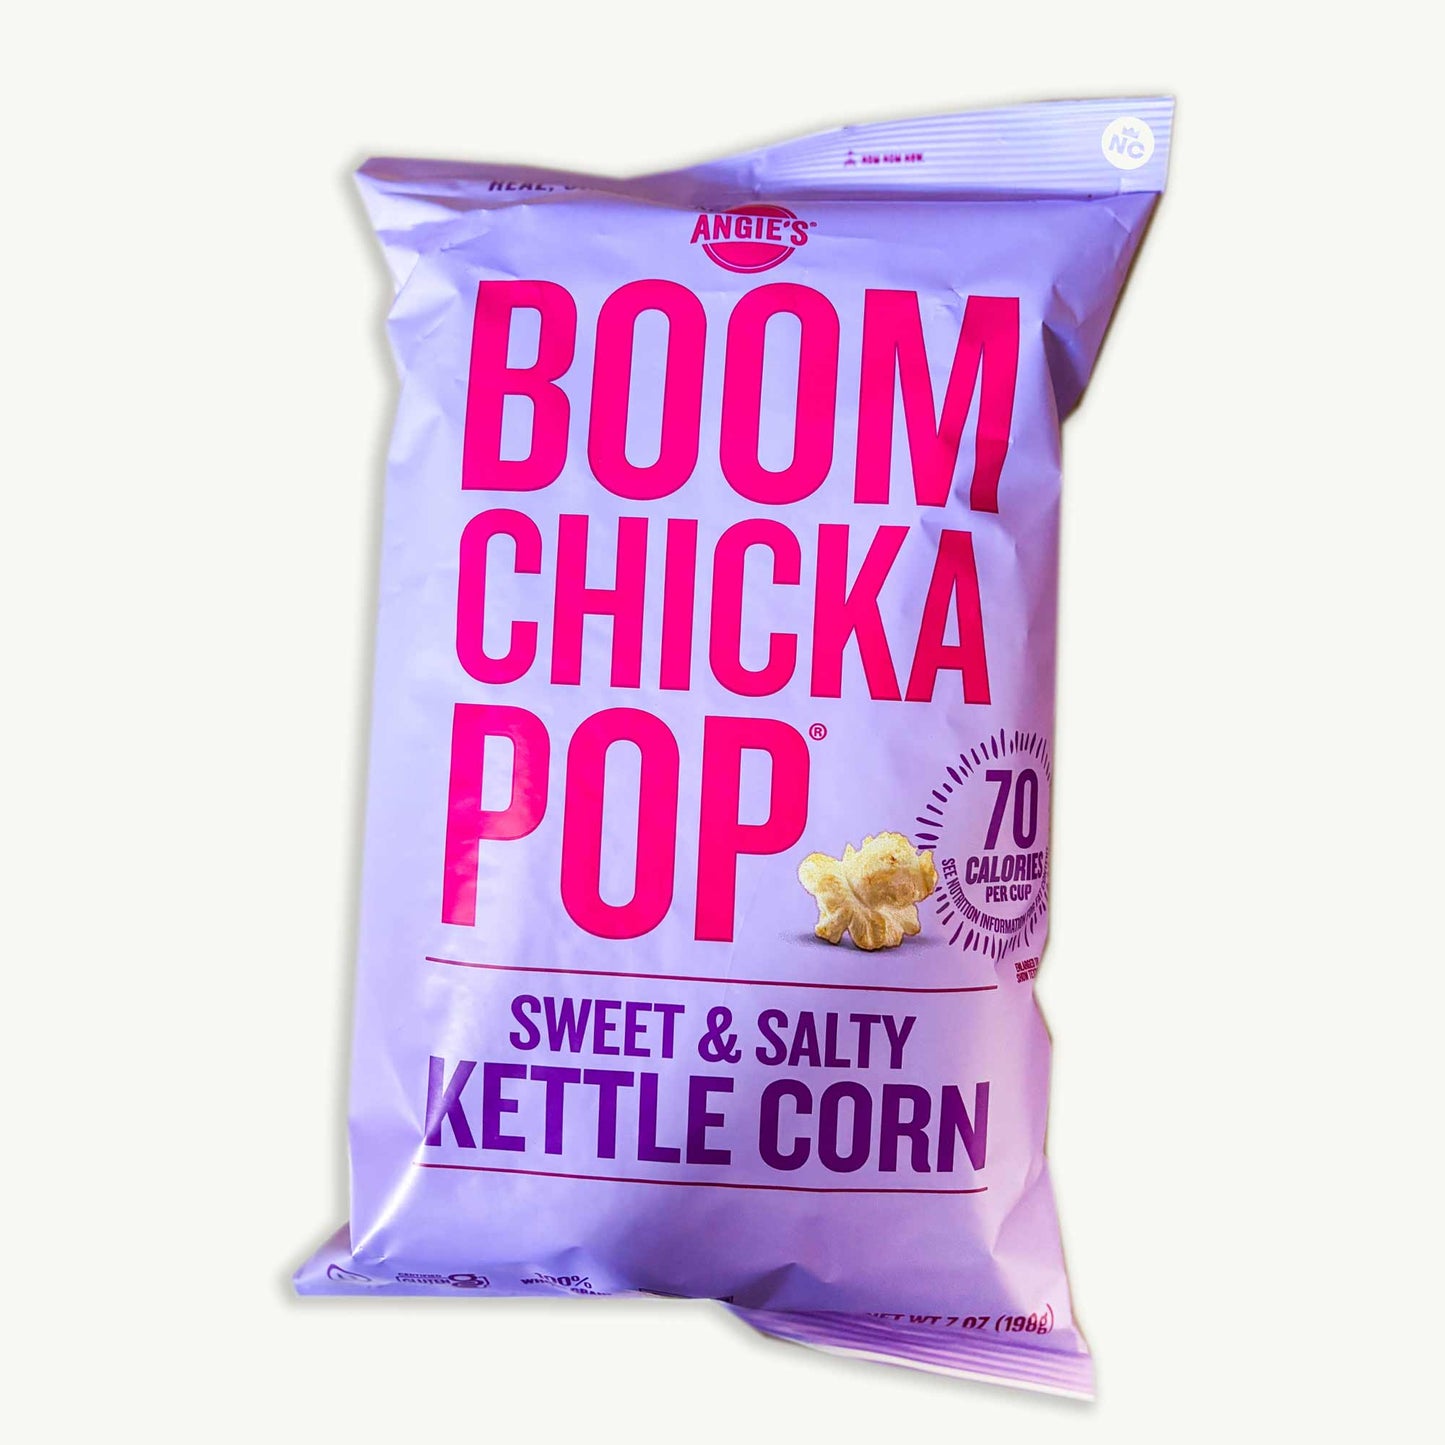 Angie's BoomChickaPop Sweet and Salty Kettle Corn (3pks - 7oz) - Dot's Cinnamon Sugar Pretzel Twists (5oz)